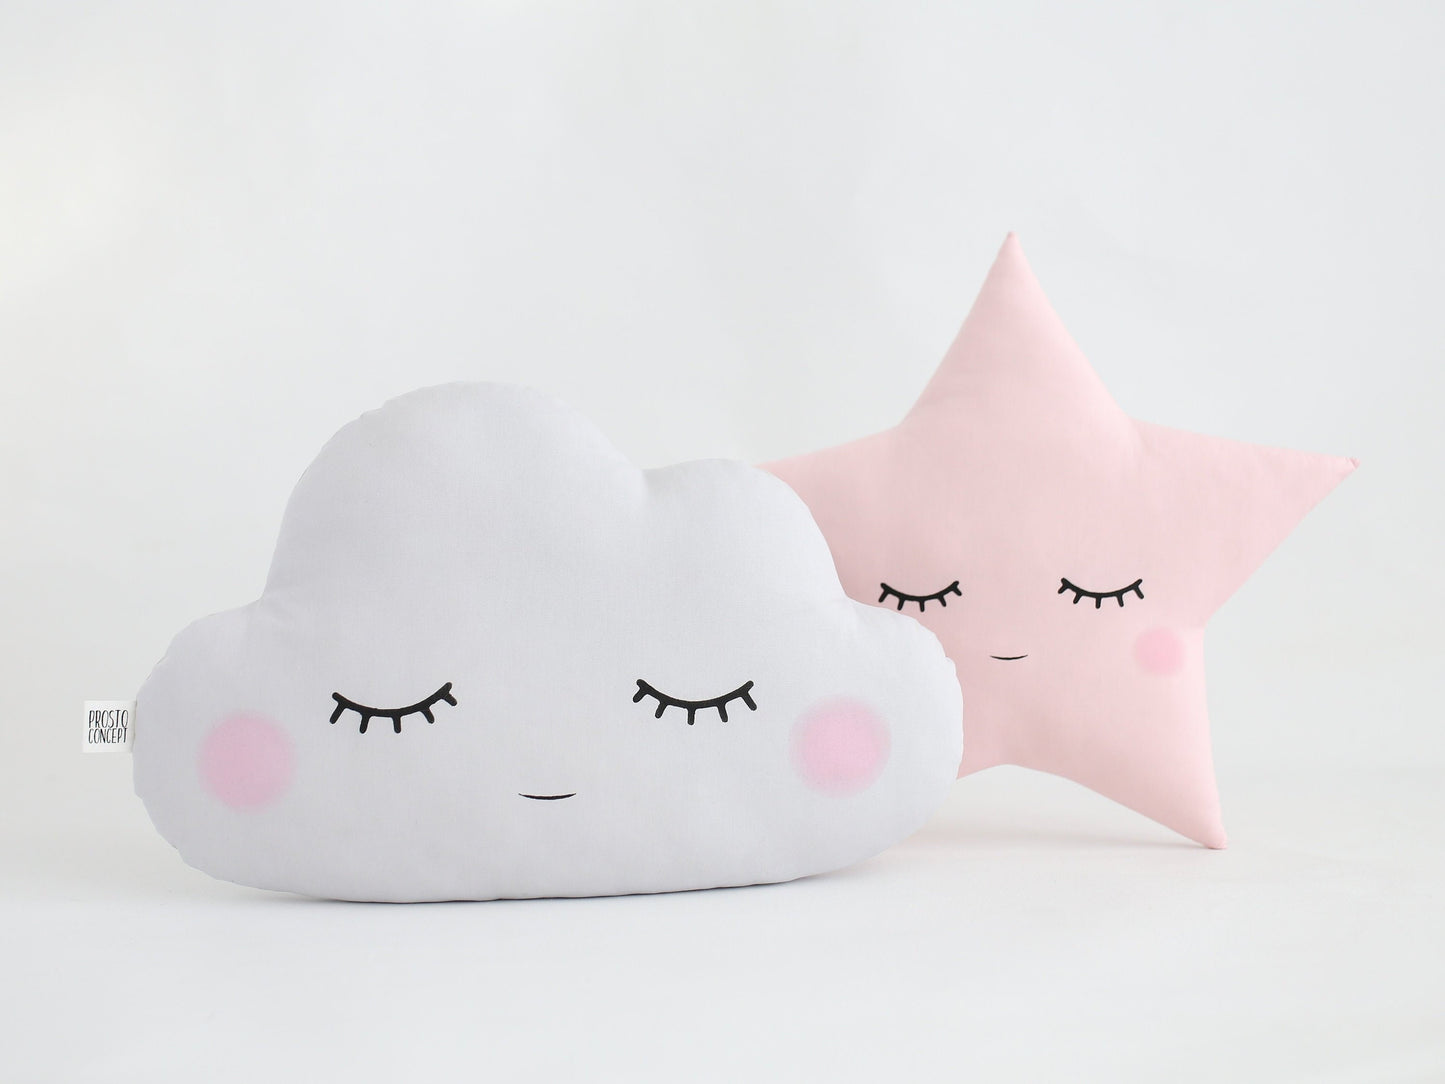 Set of 2 Pillows - Light Gray Cloud Pillow and Pale Pink Star Pillow